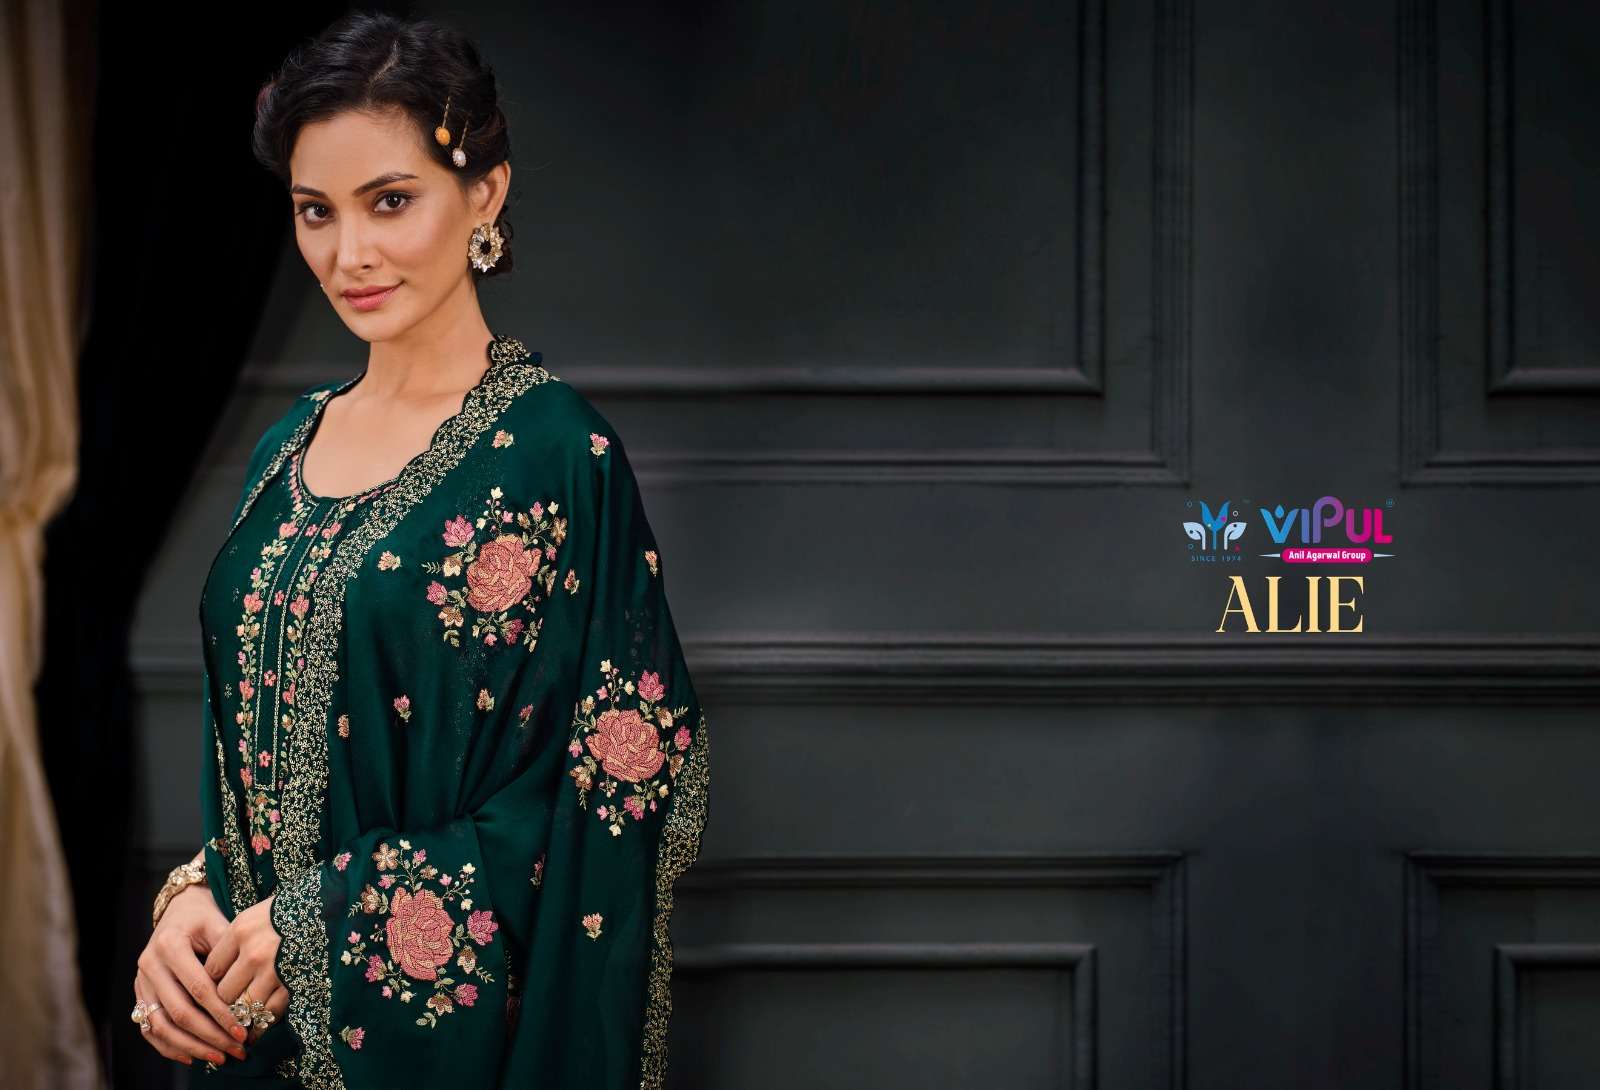 vipul alie 5331-5336 series designer wedding wear salwar kameez wholesaler surat gujarat